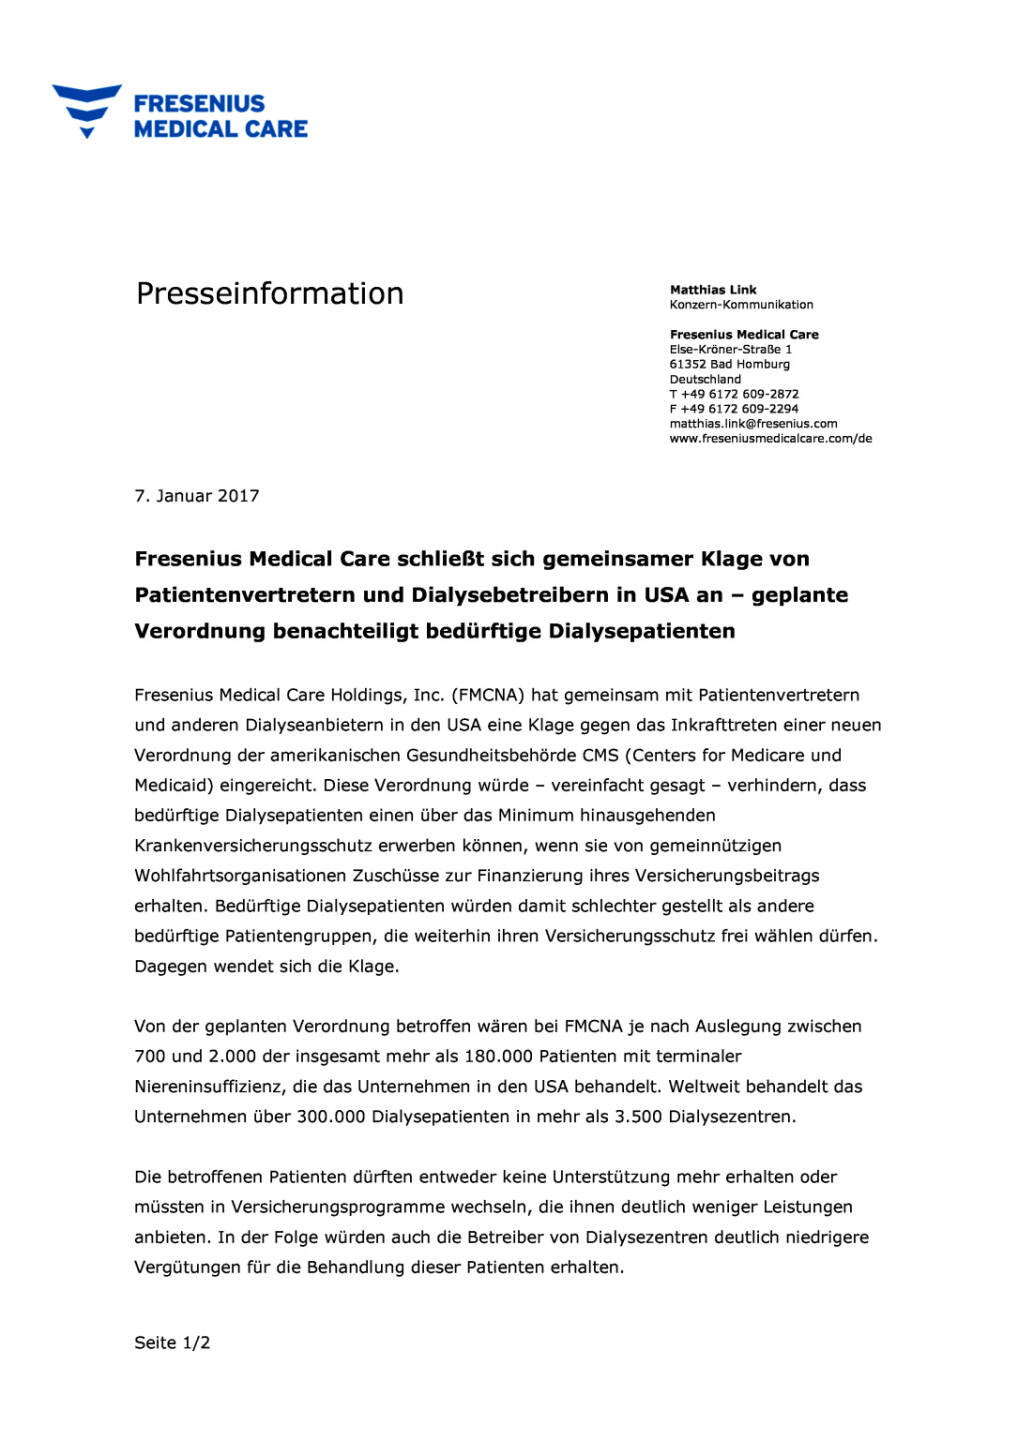 Fresenius Medical Care schließt sich gemeinsamer Klage in USA an, Seite 1/2, komplettes Dokument unter http://boerse-social.com/static/uploads/file_2045_fresenius_medical_care_schliesst_sich_gemeinsamer_klage_in_usa_an.pdf